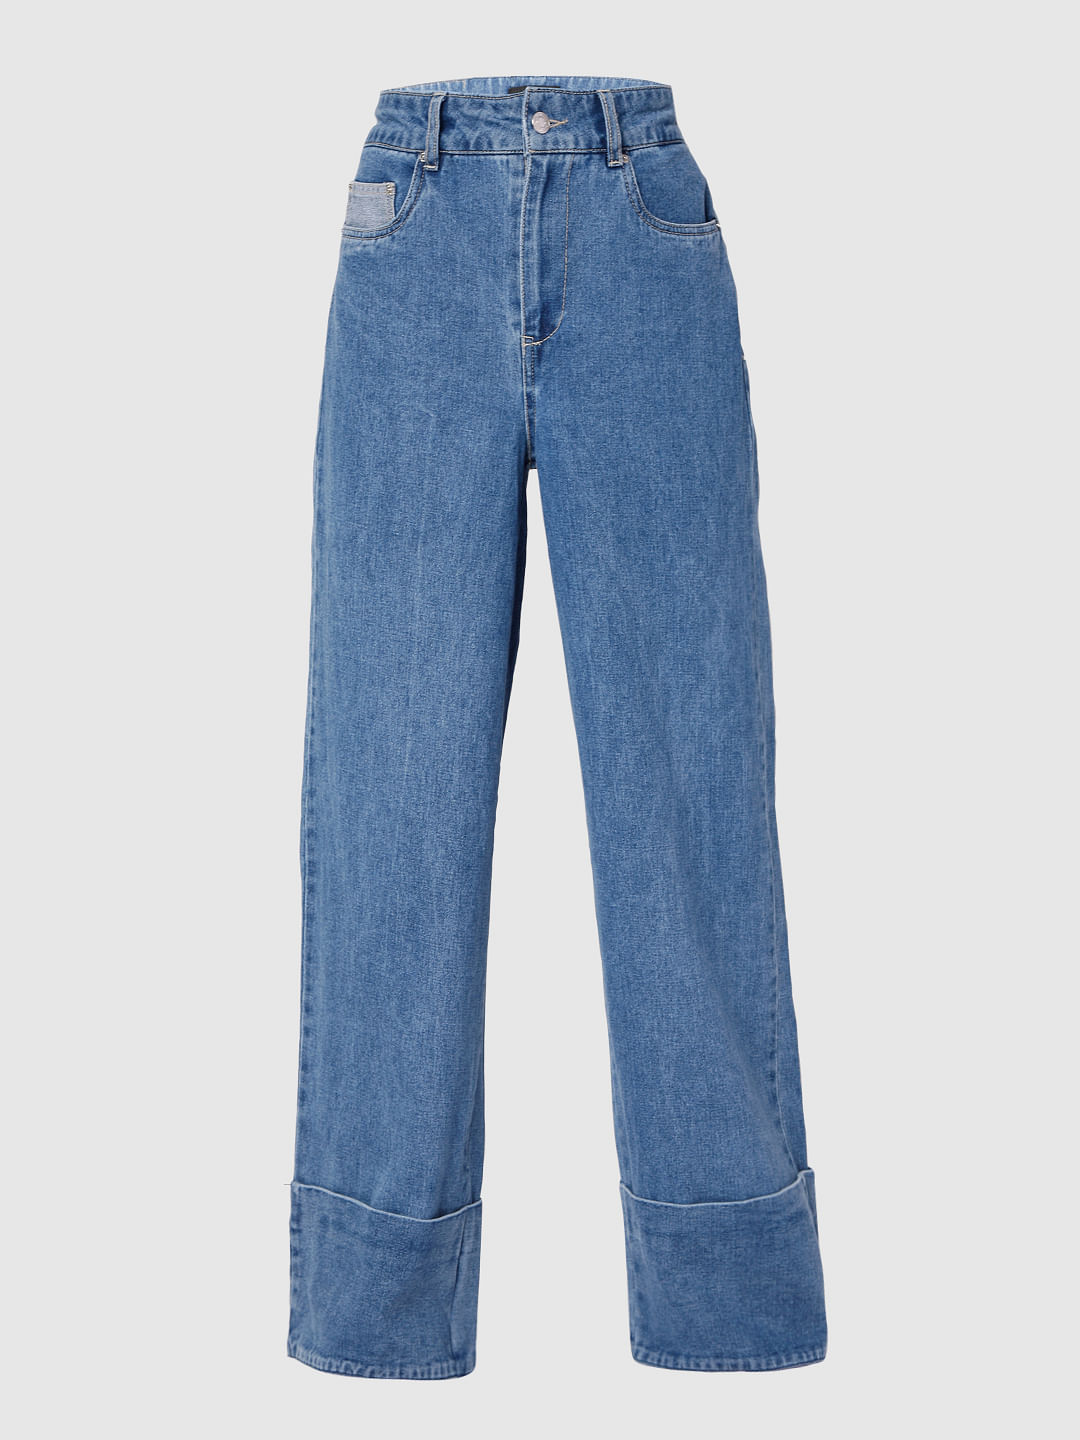 Buy Mens Dark Blue Denim Jeans Online | Merchant Marine